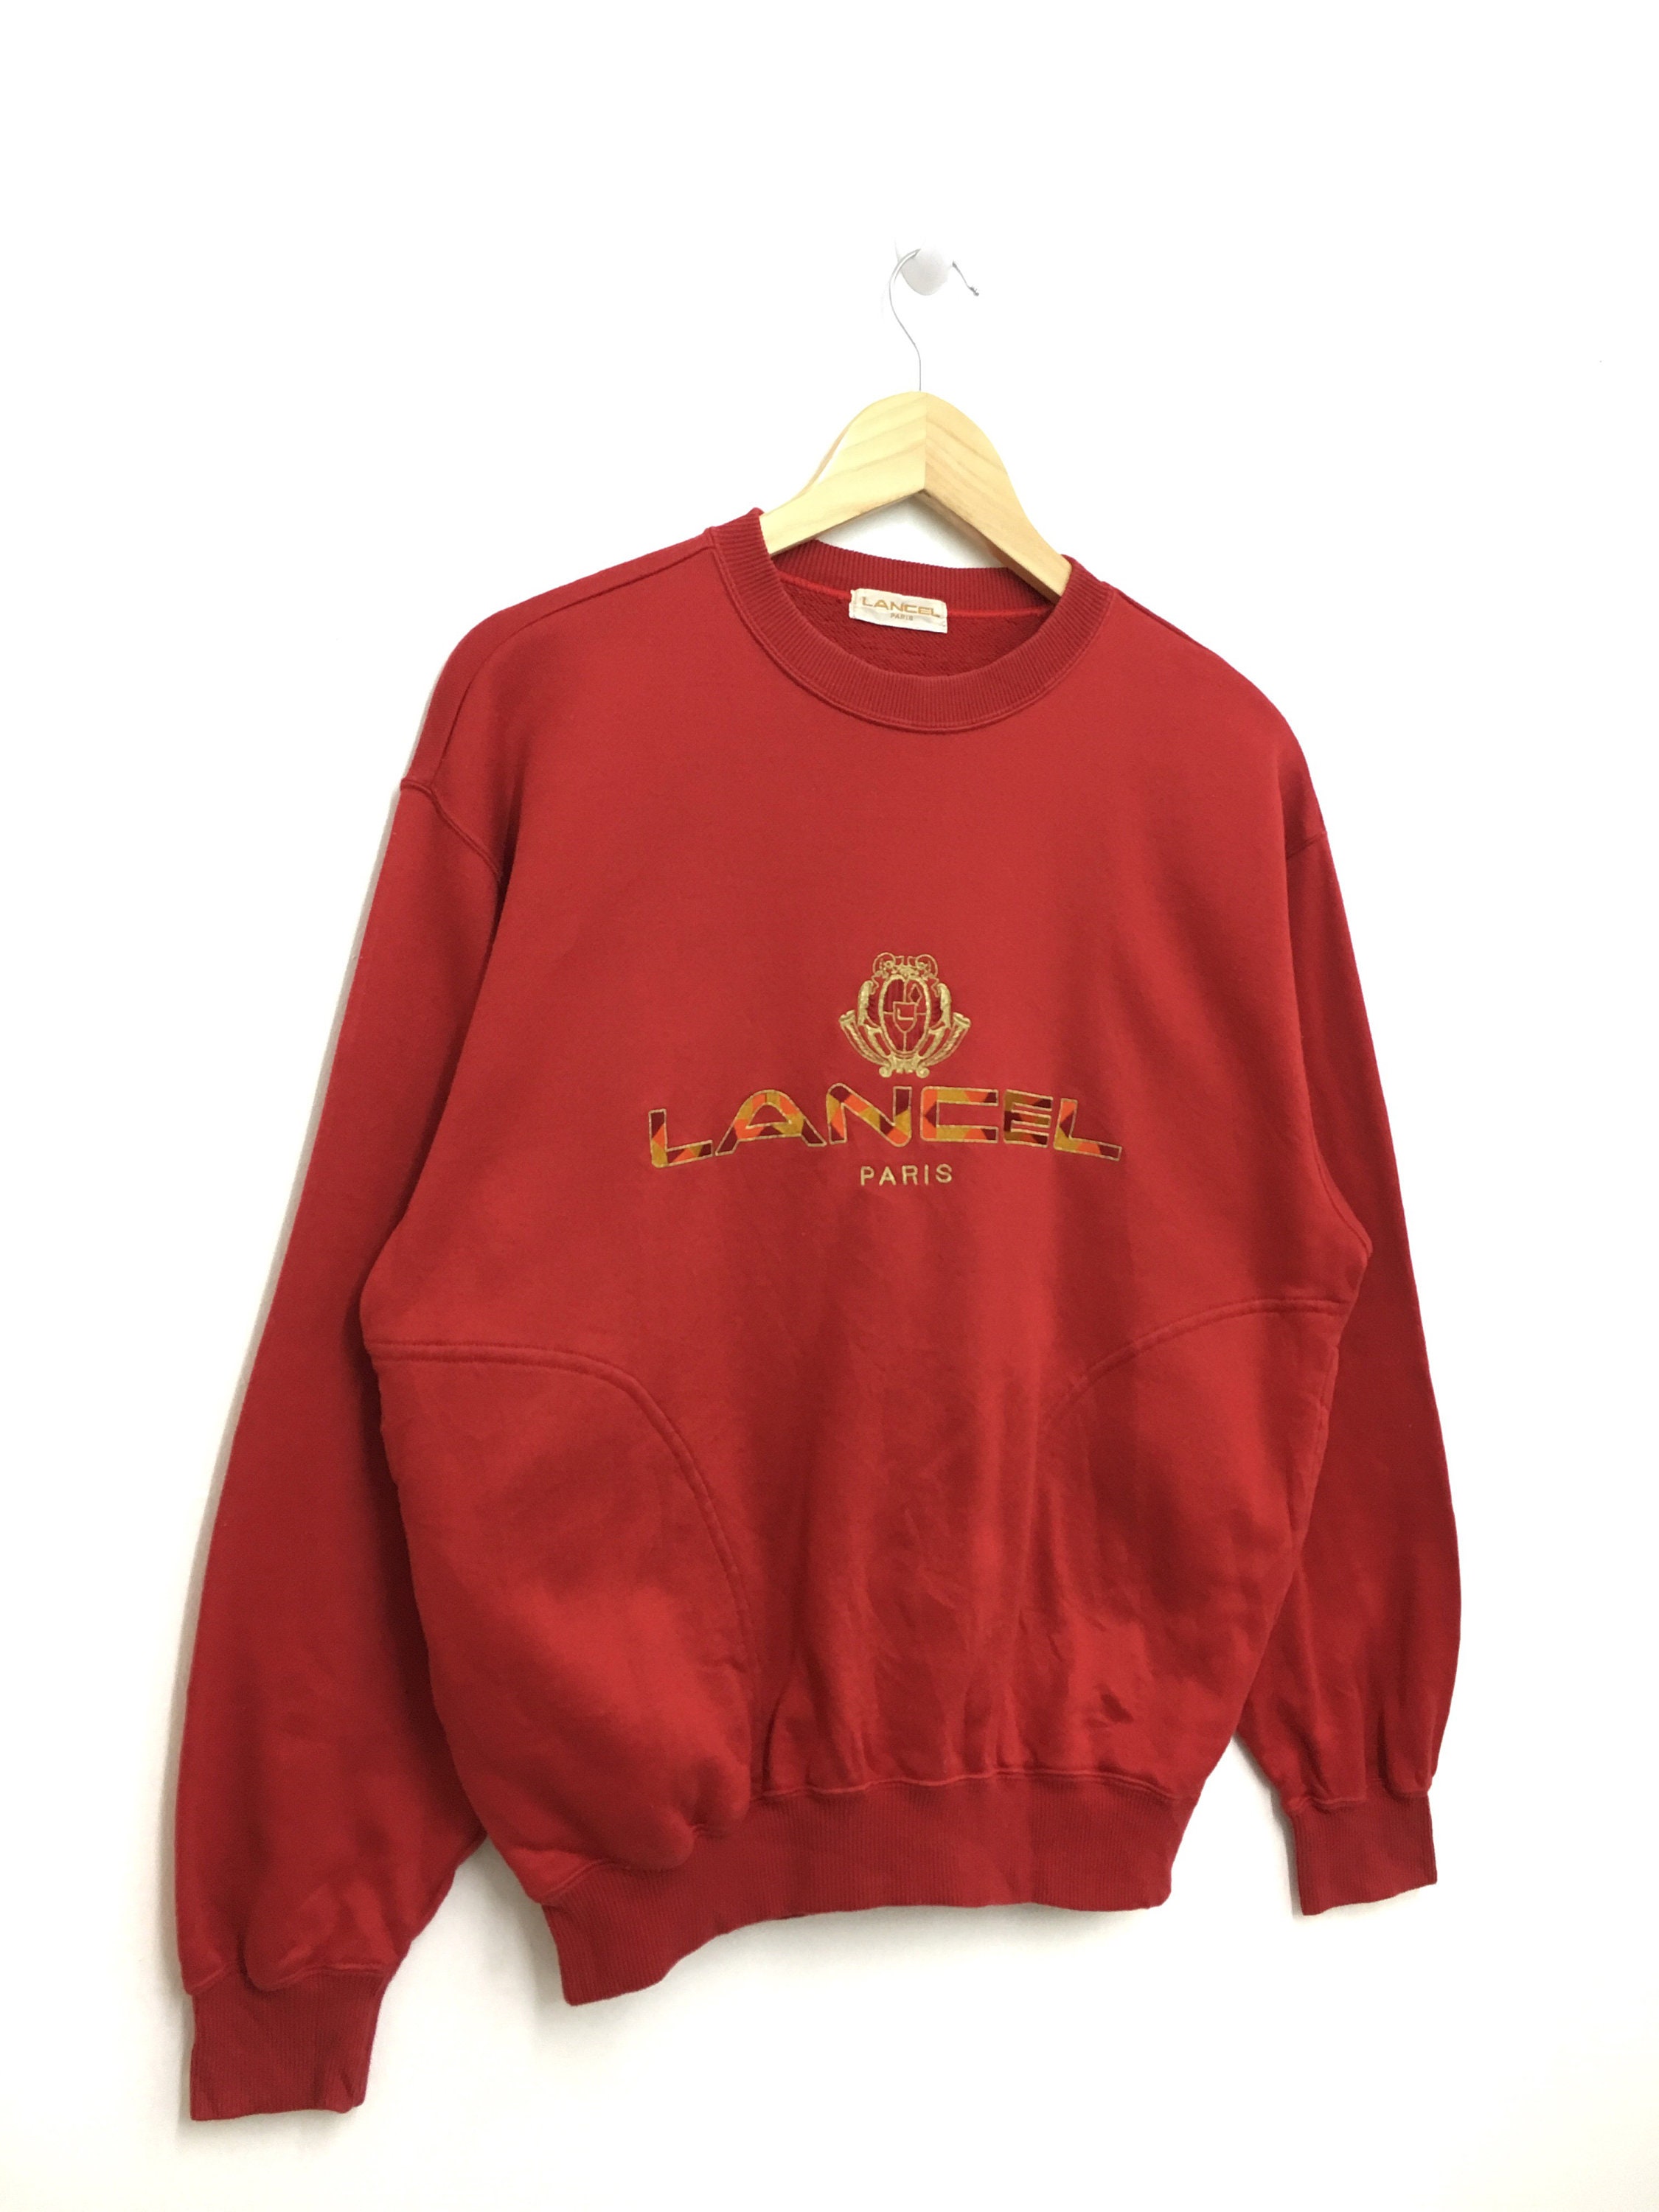 Rare Vintage 90's LANCEL Paris Sweatshirt Embroidery - Etsy